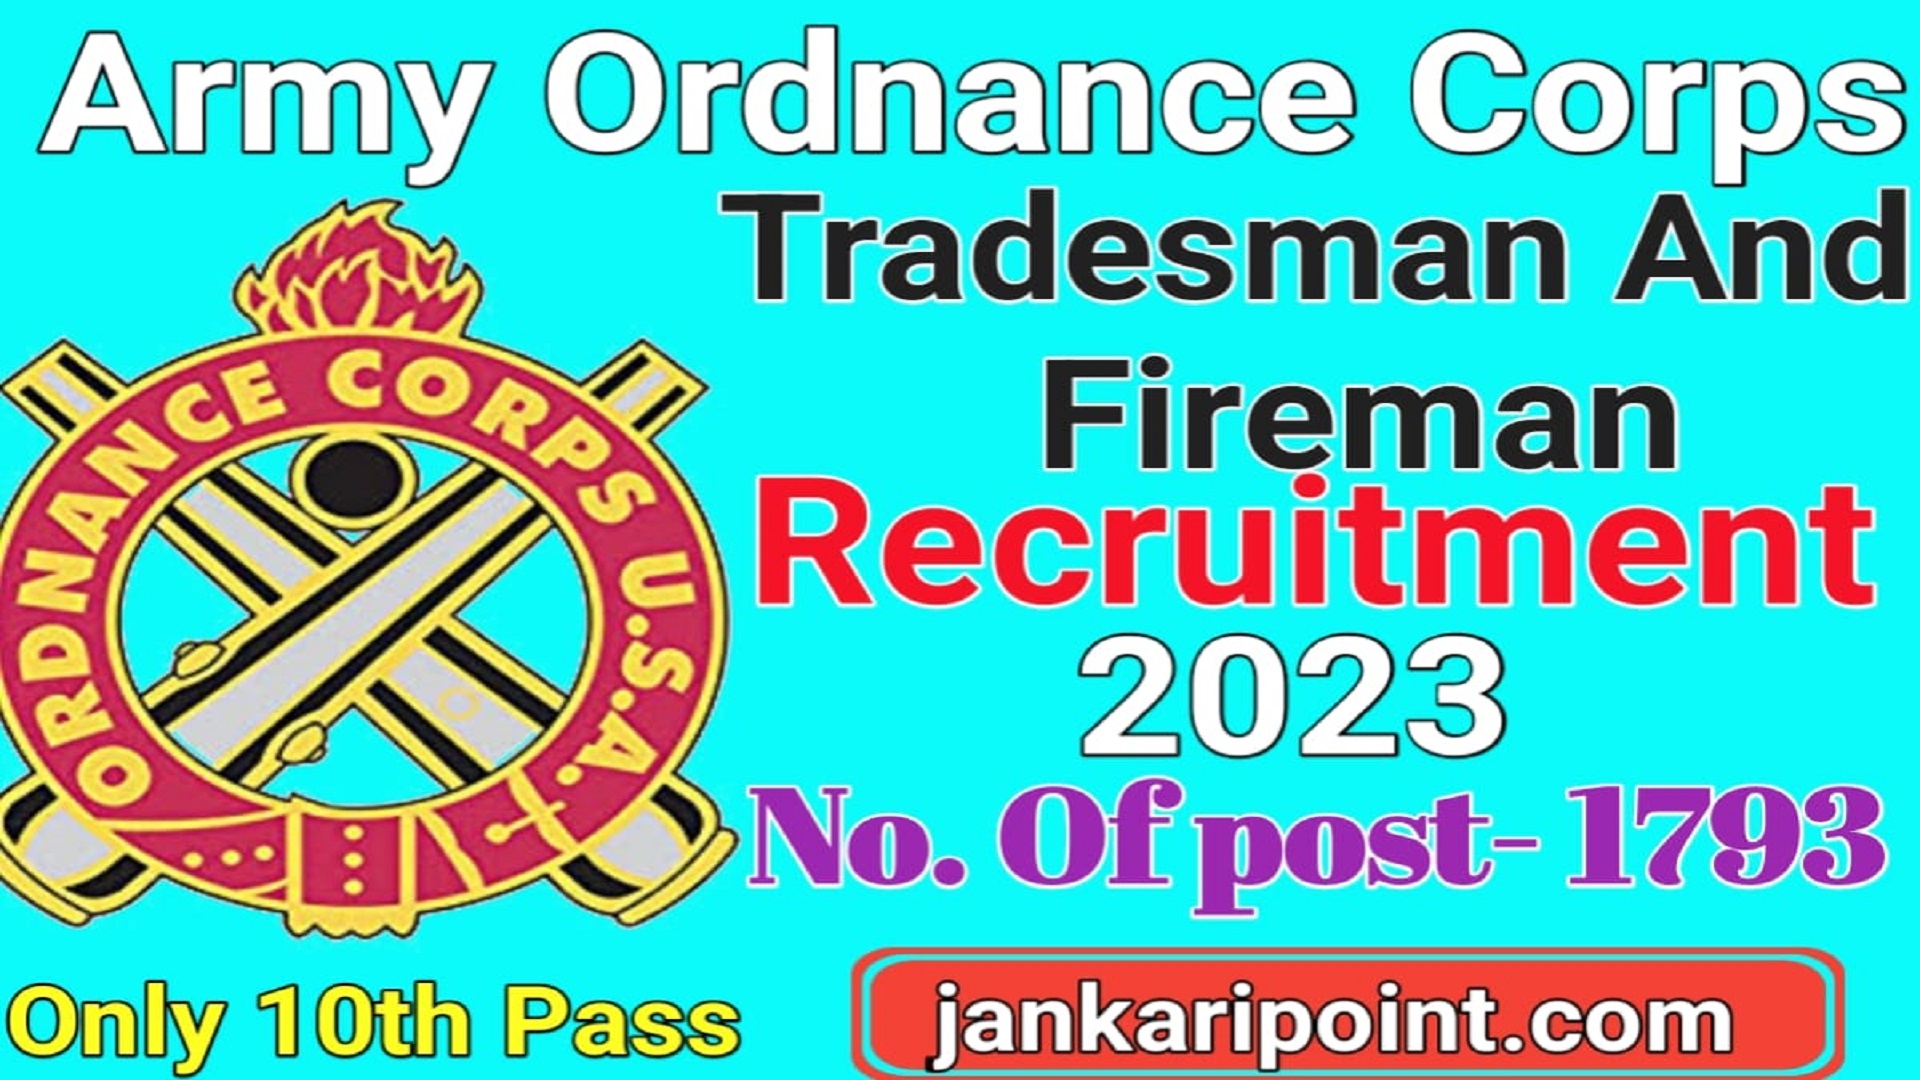 AOC Tradesman And Fireman Recruitment 2023